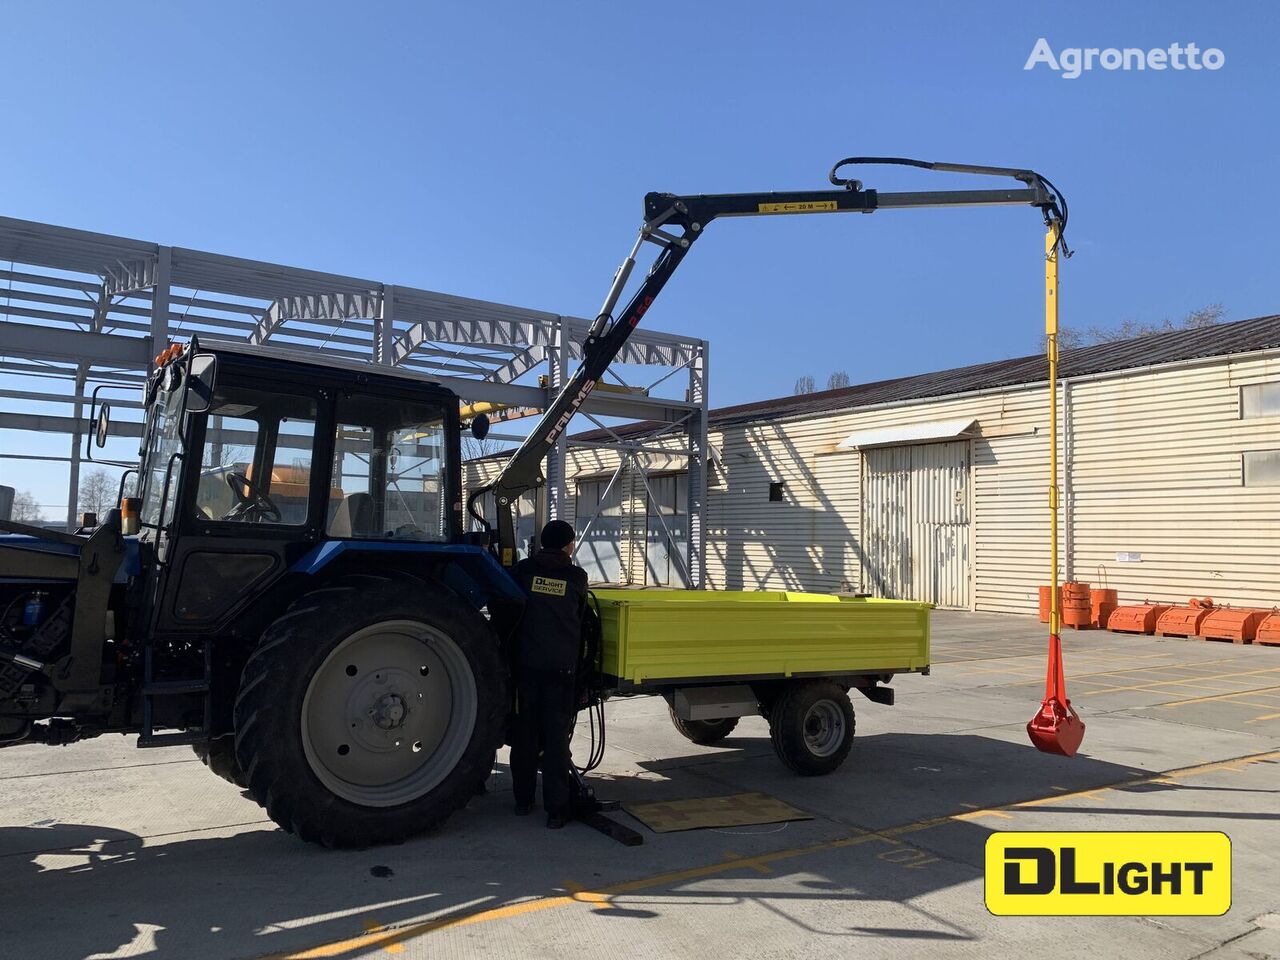 DLight DL CityMaster remolque agrícola nuevo